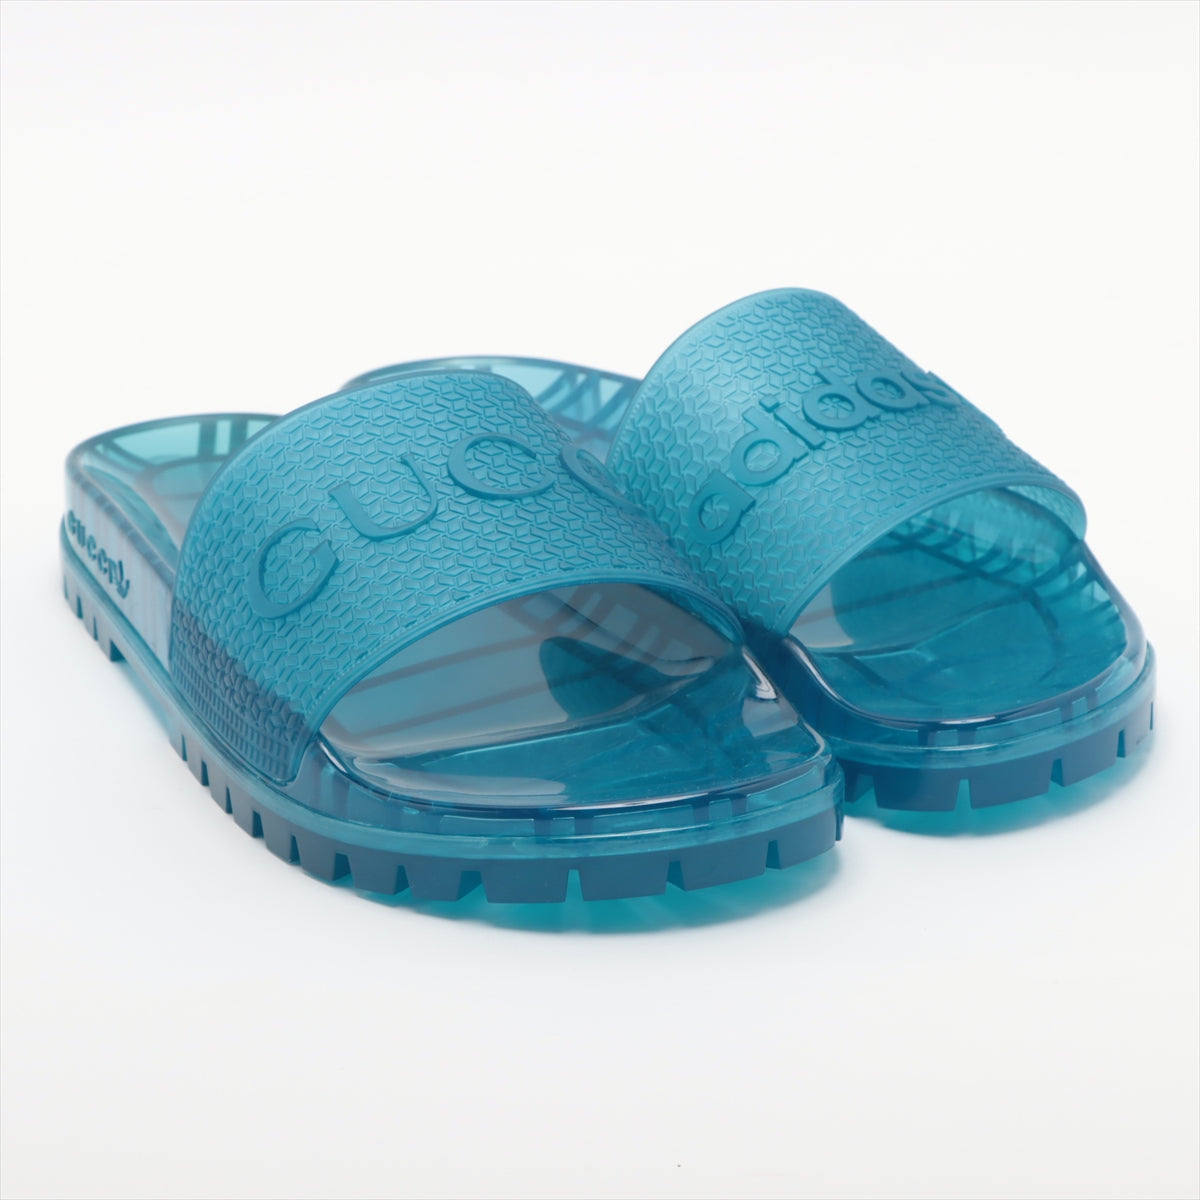 Gucci x adidas Adiletta Rubber Sandals 11 Men's Blue box There is a storage bag